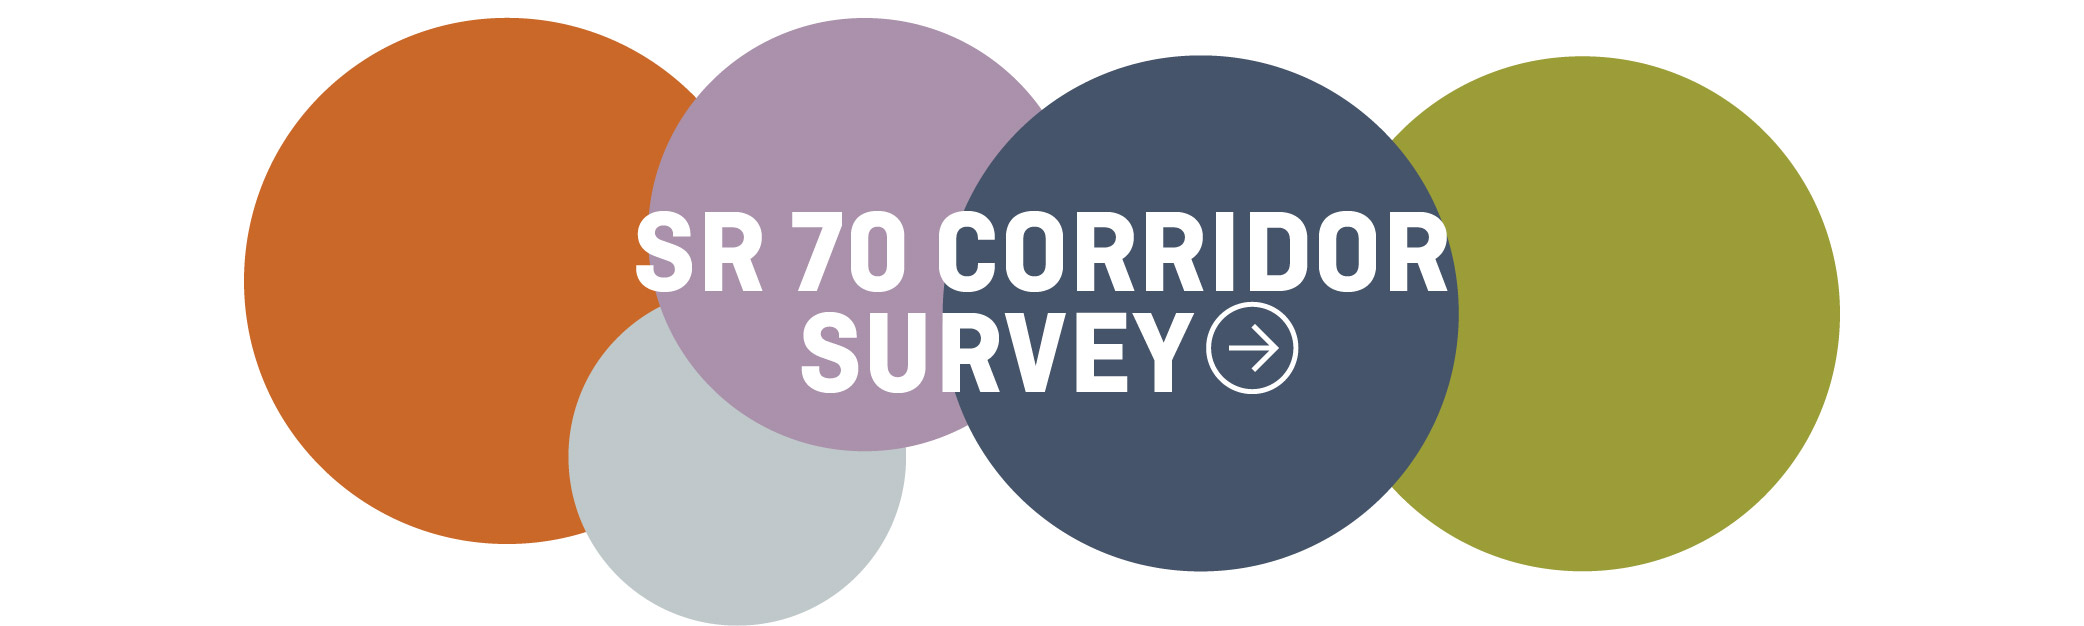 SR 70 Corridor Survey